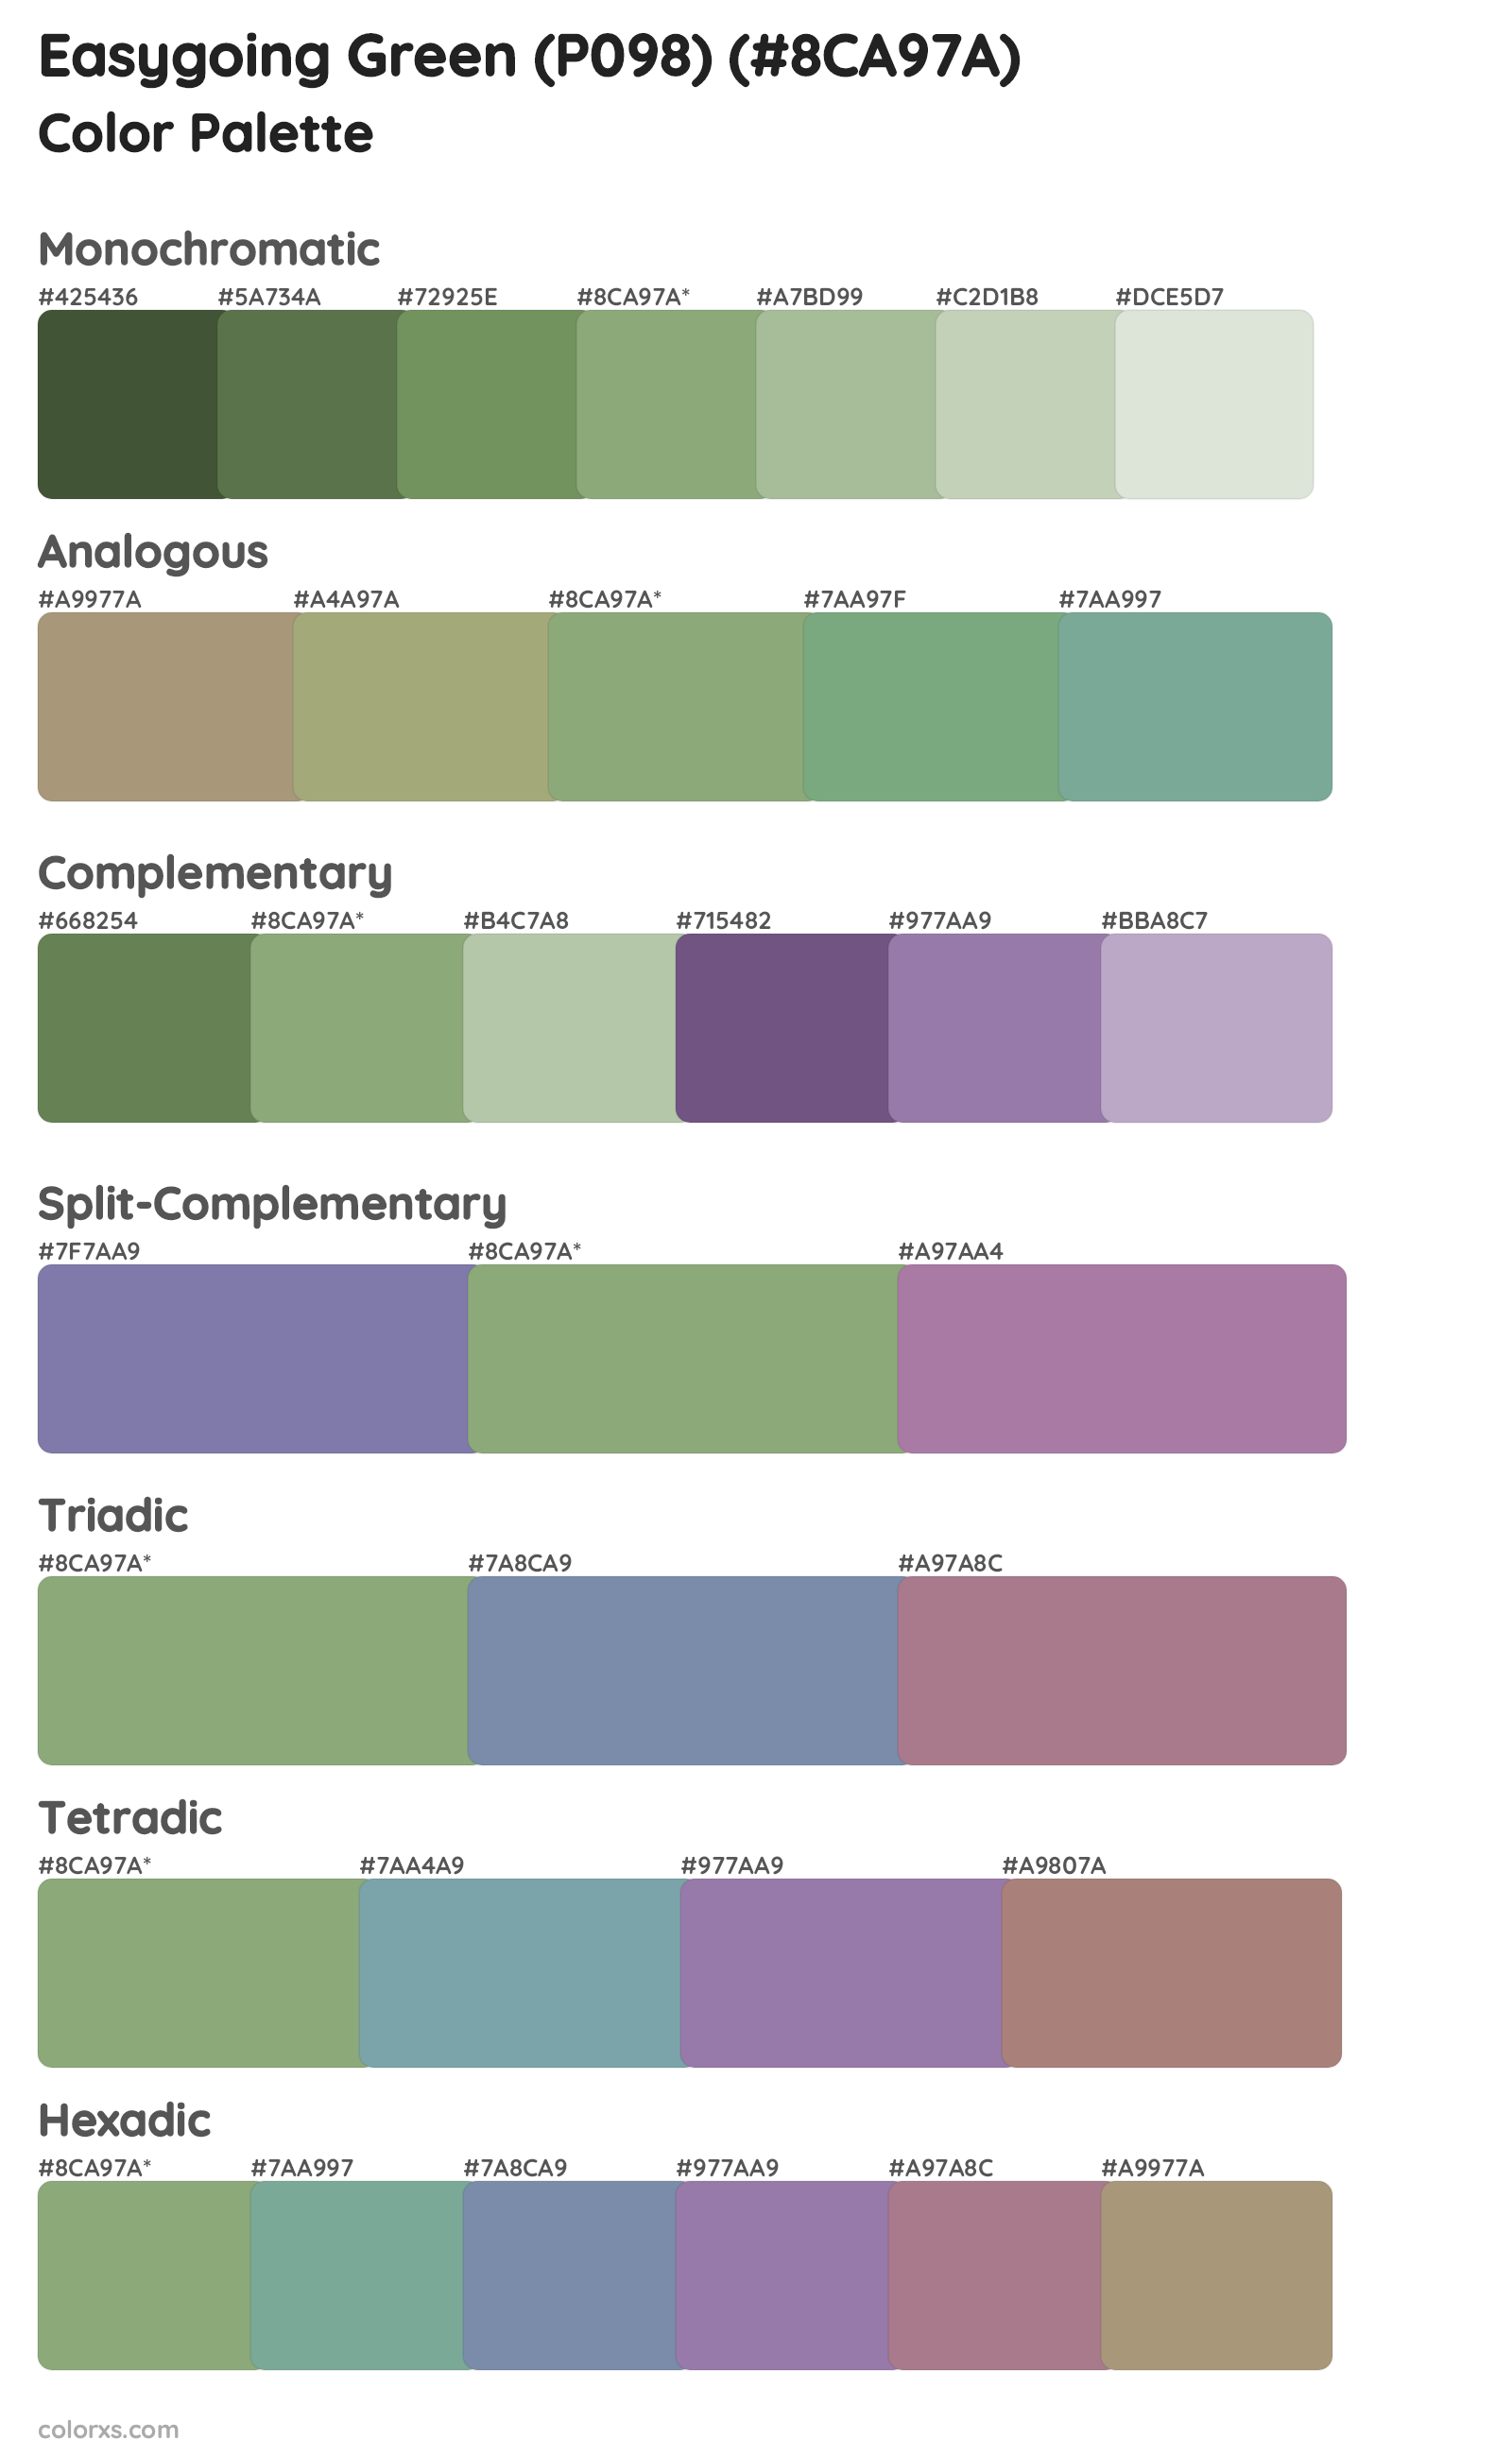 Easygoing Green (P098) Color Scheme Palettes